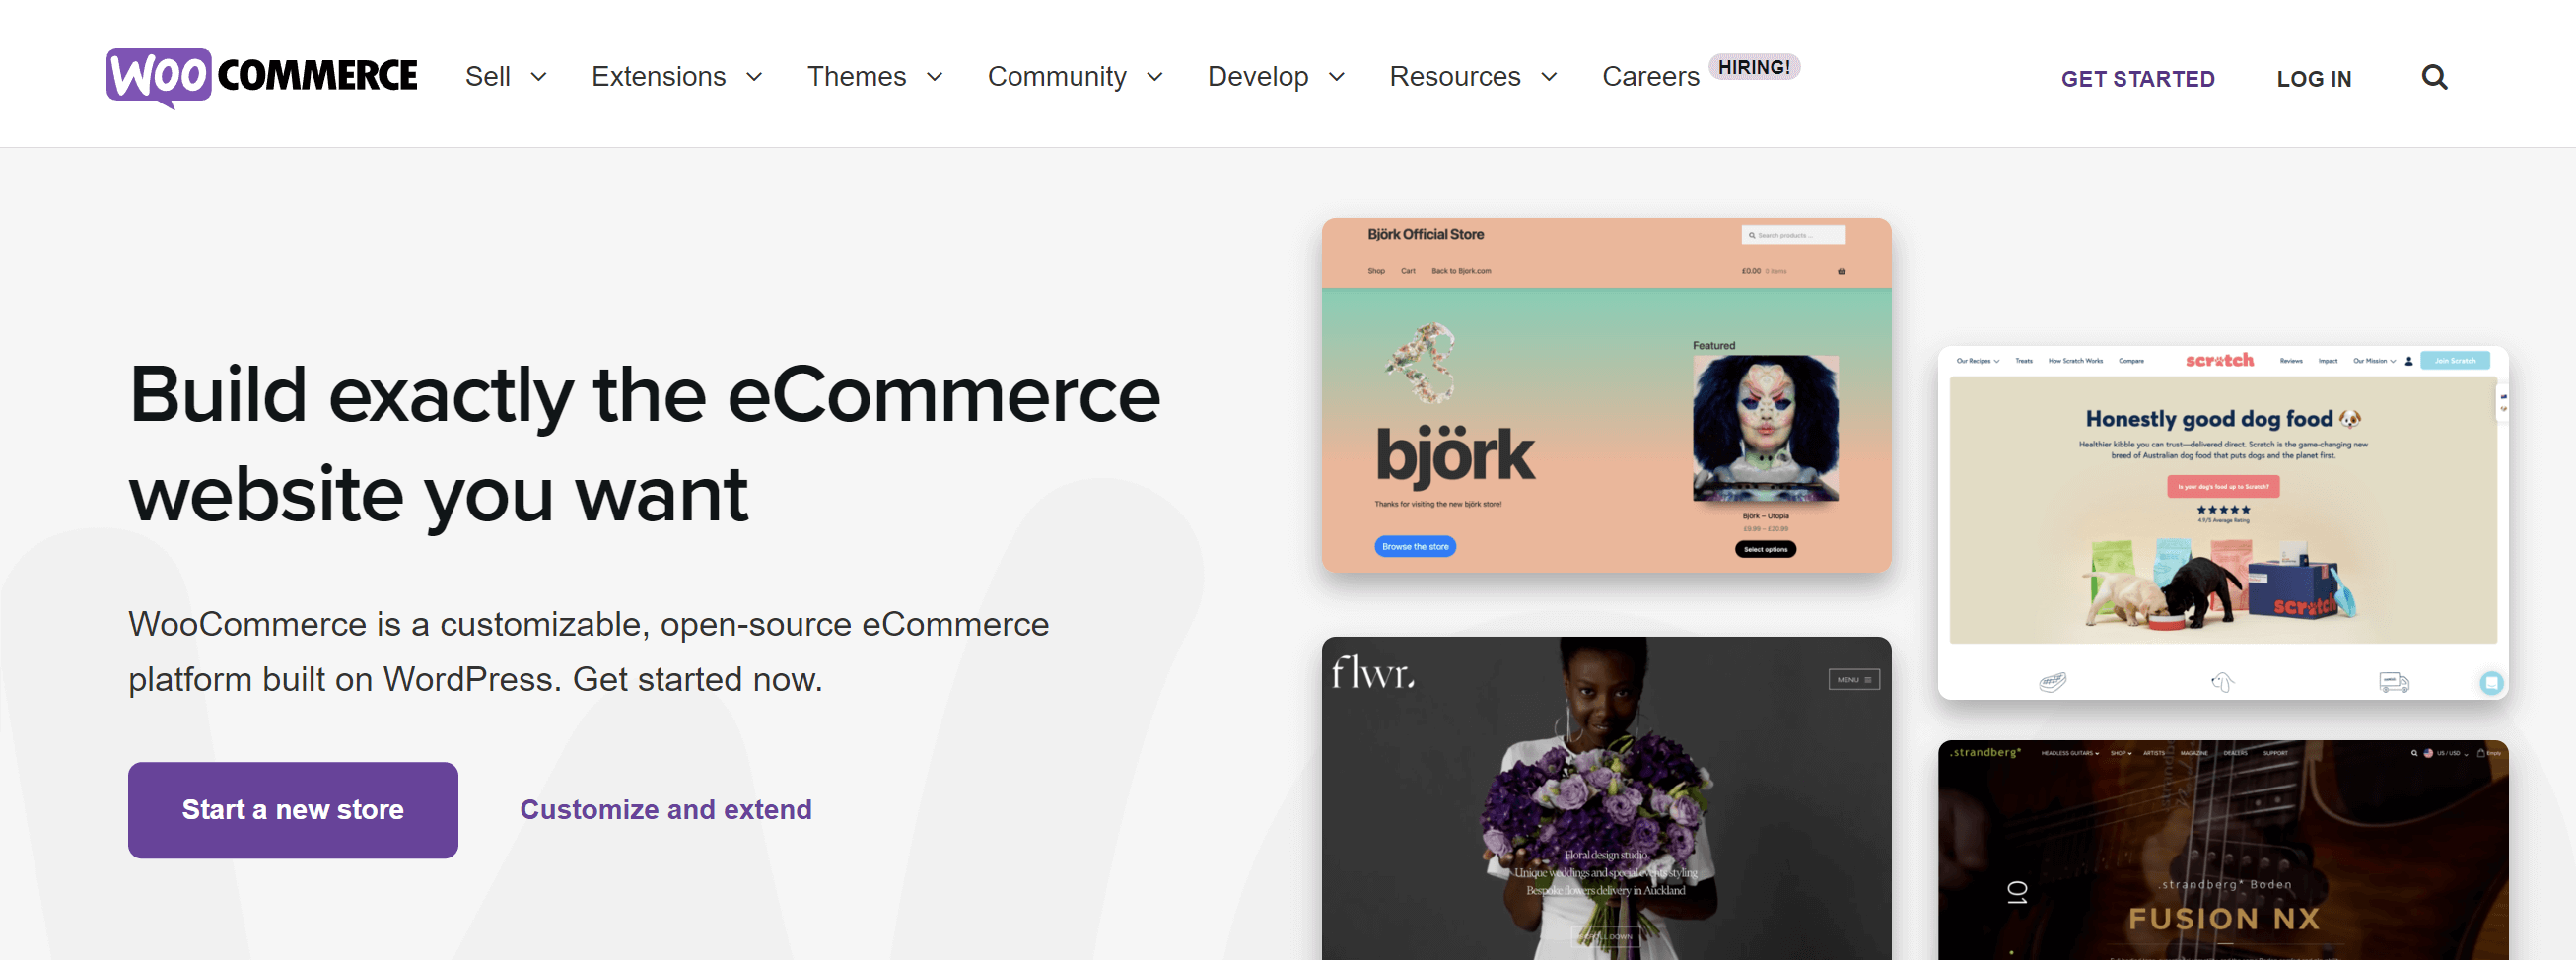 WooCommerce free platform for ecommerce websites